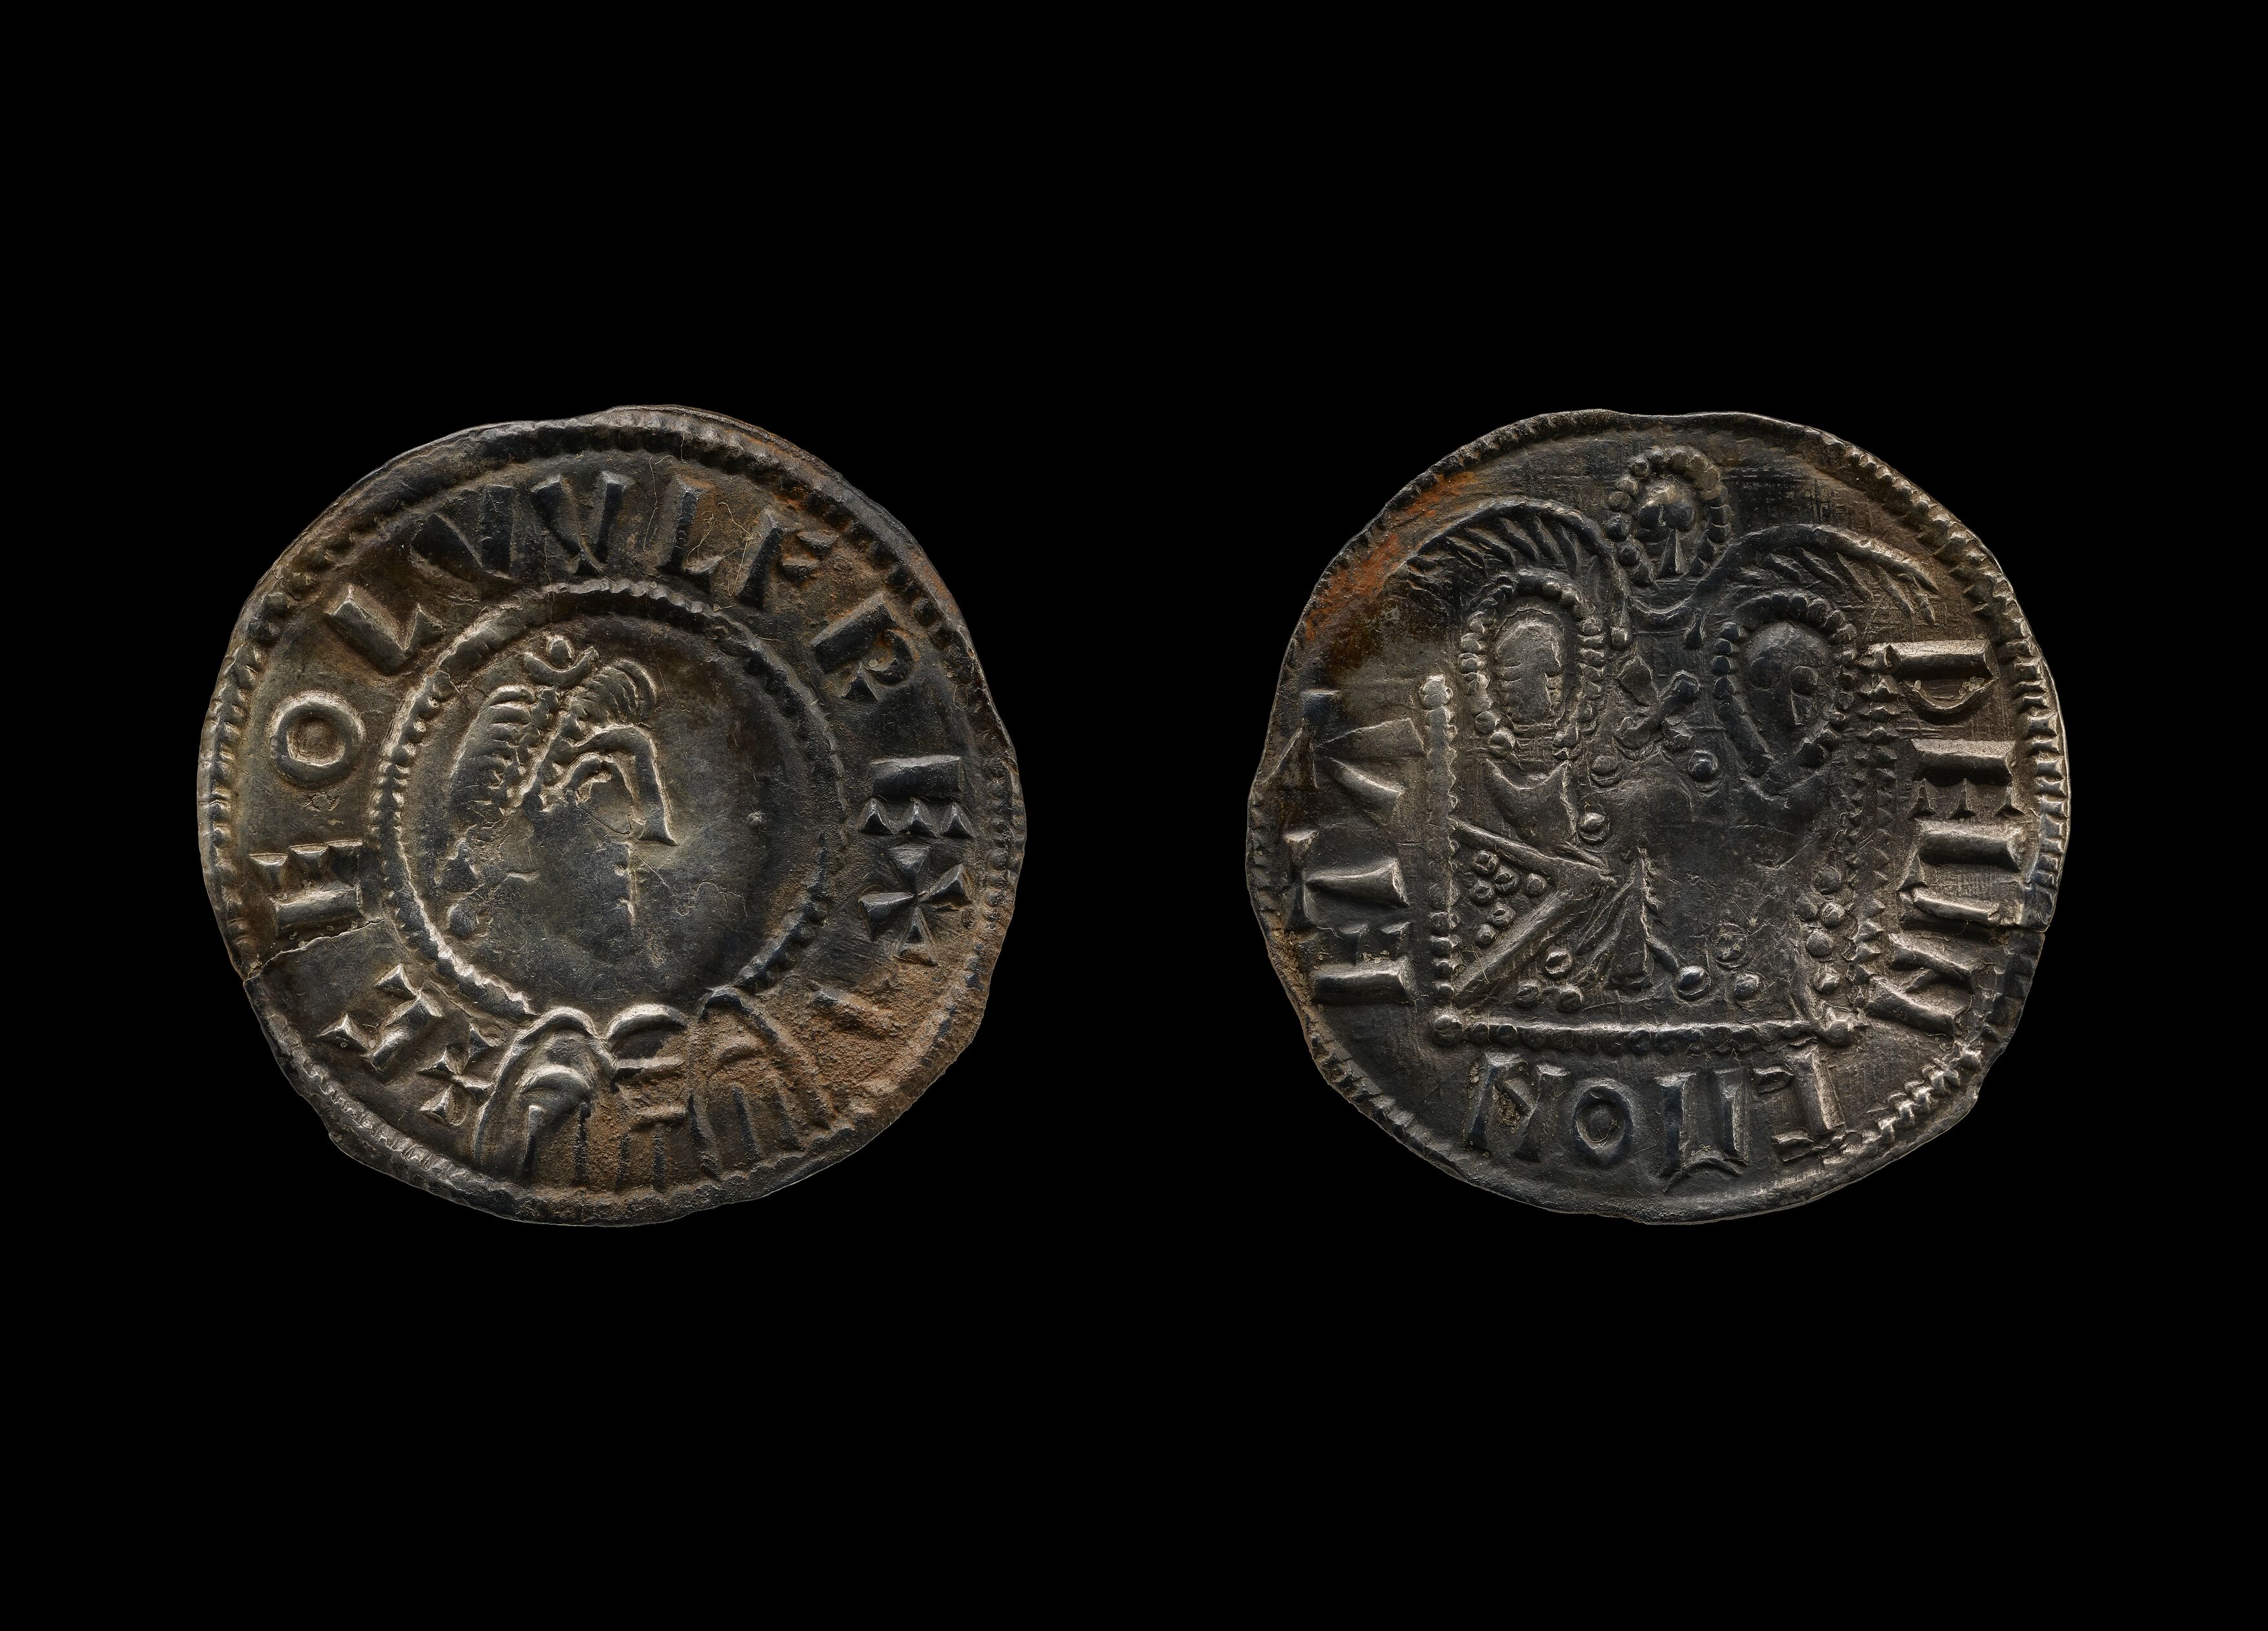 Ceonwulf coin